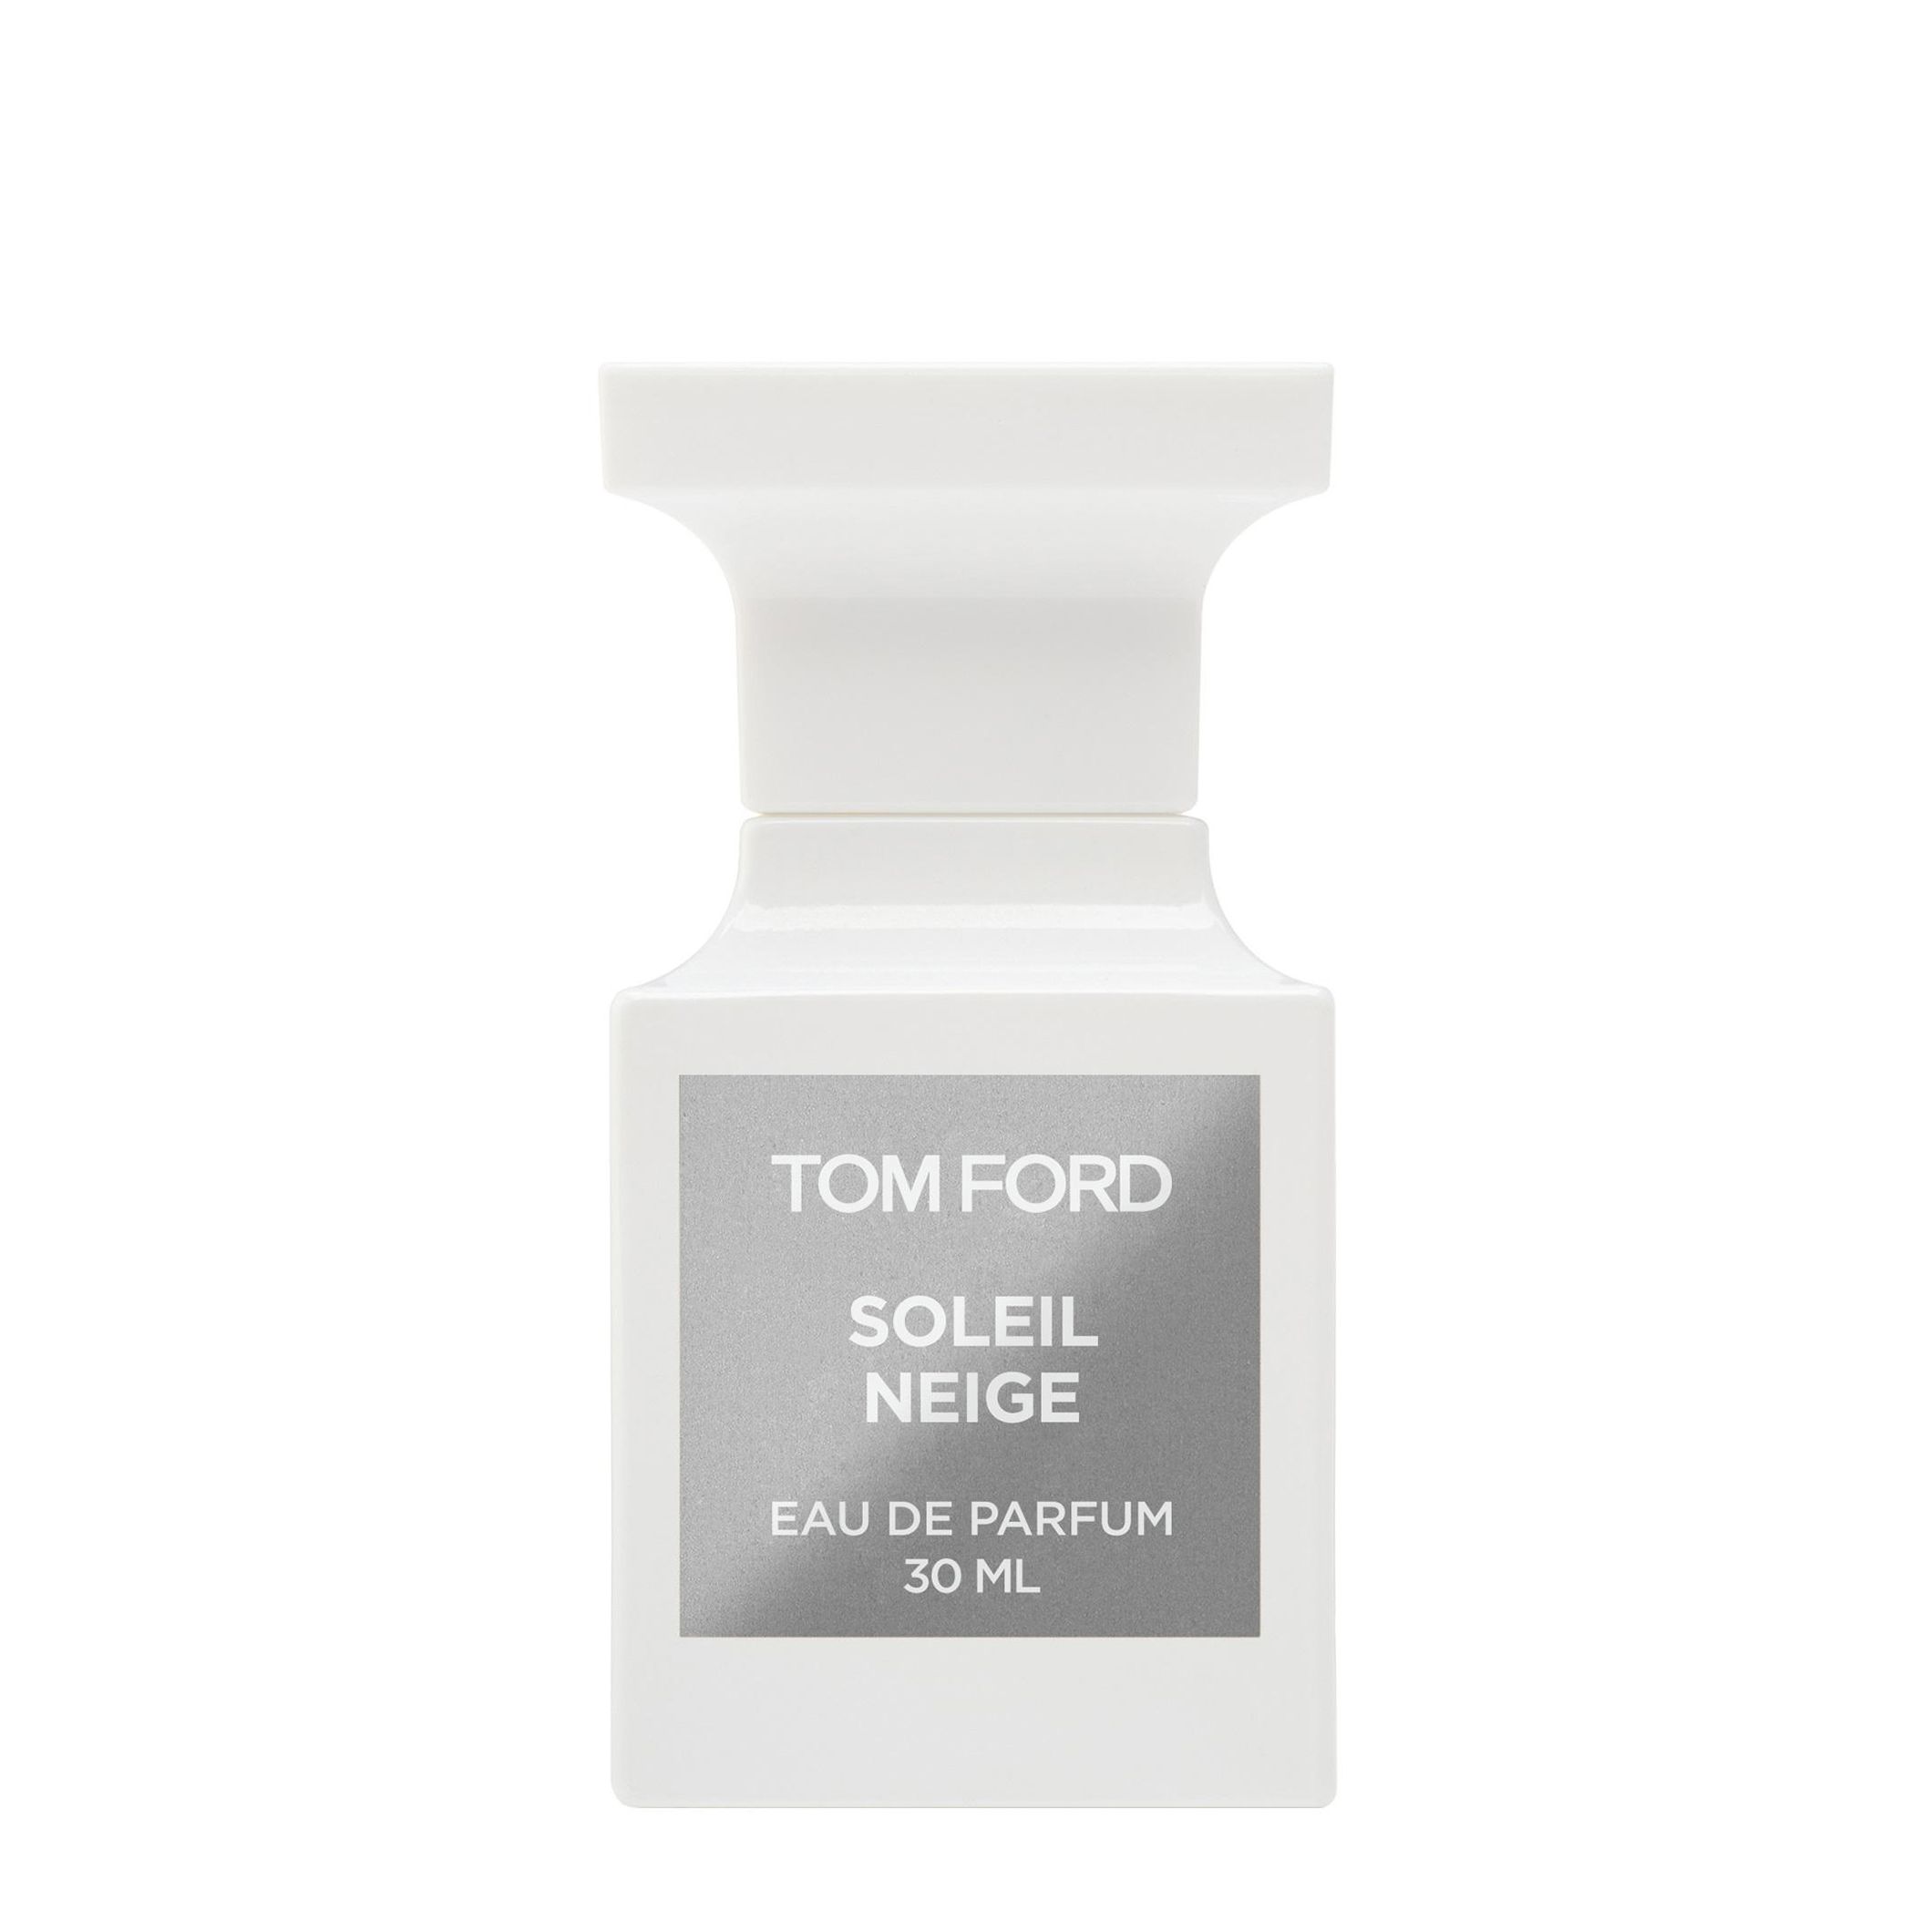 Вода парфюмерная Tom Ford Soleil Neige, унисекс, 30 мл lalique soleil 100